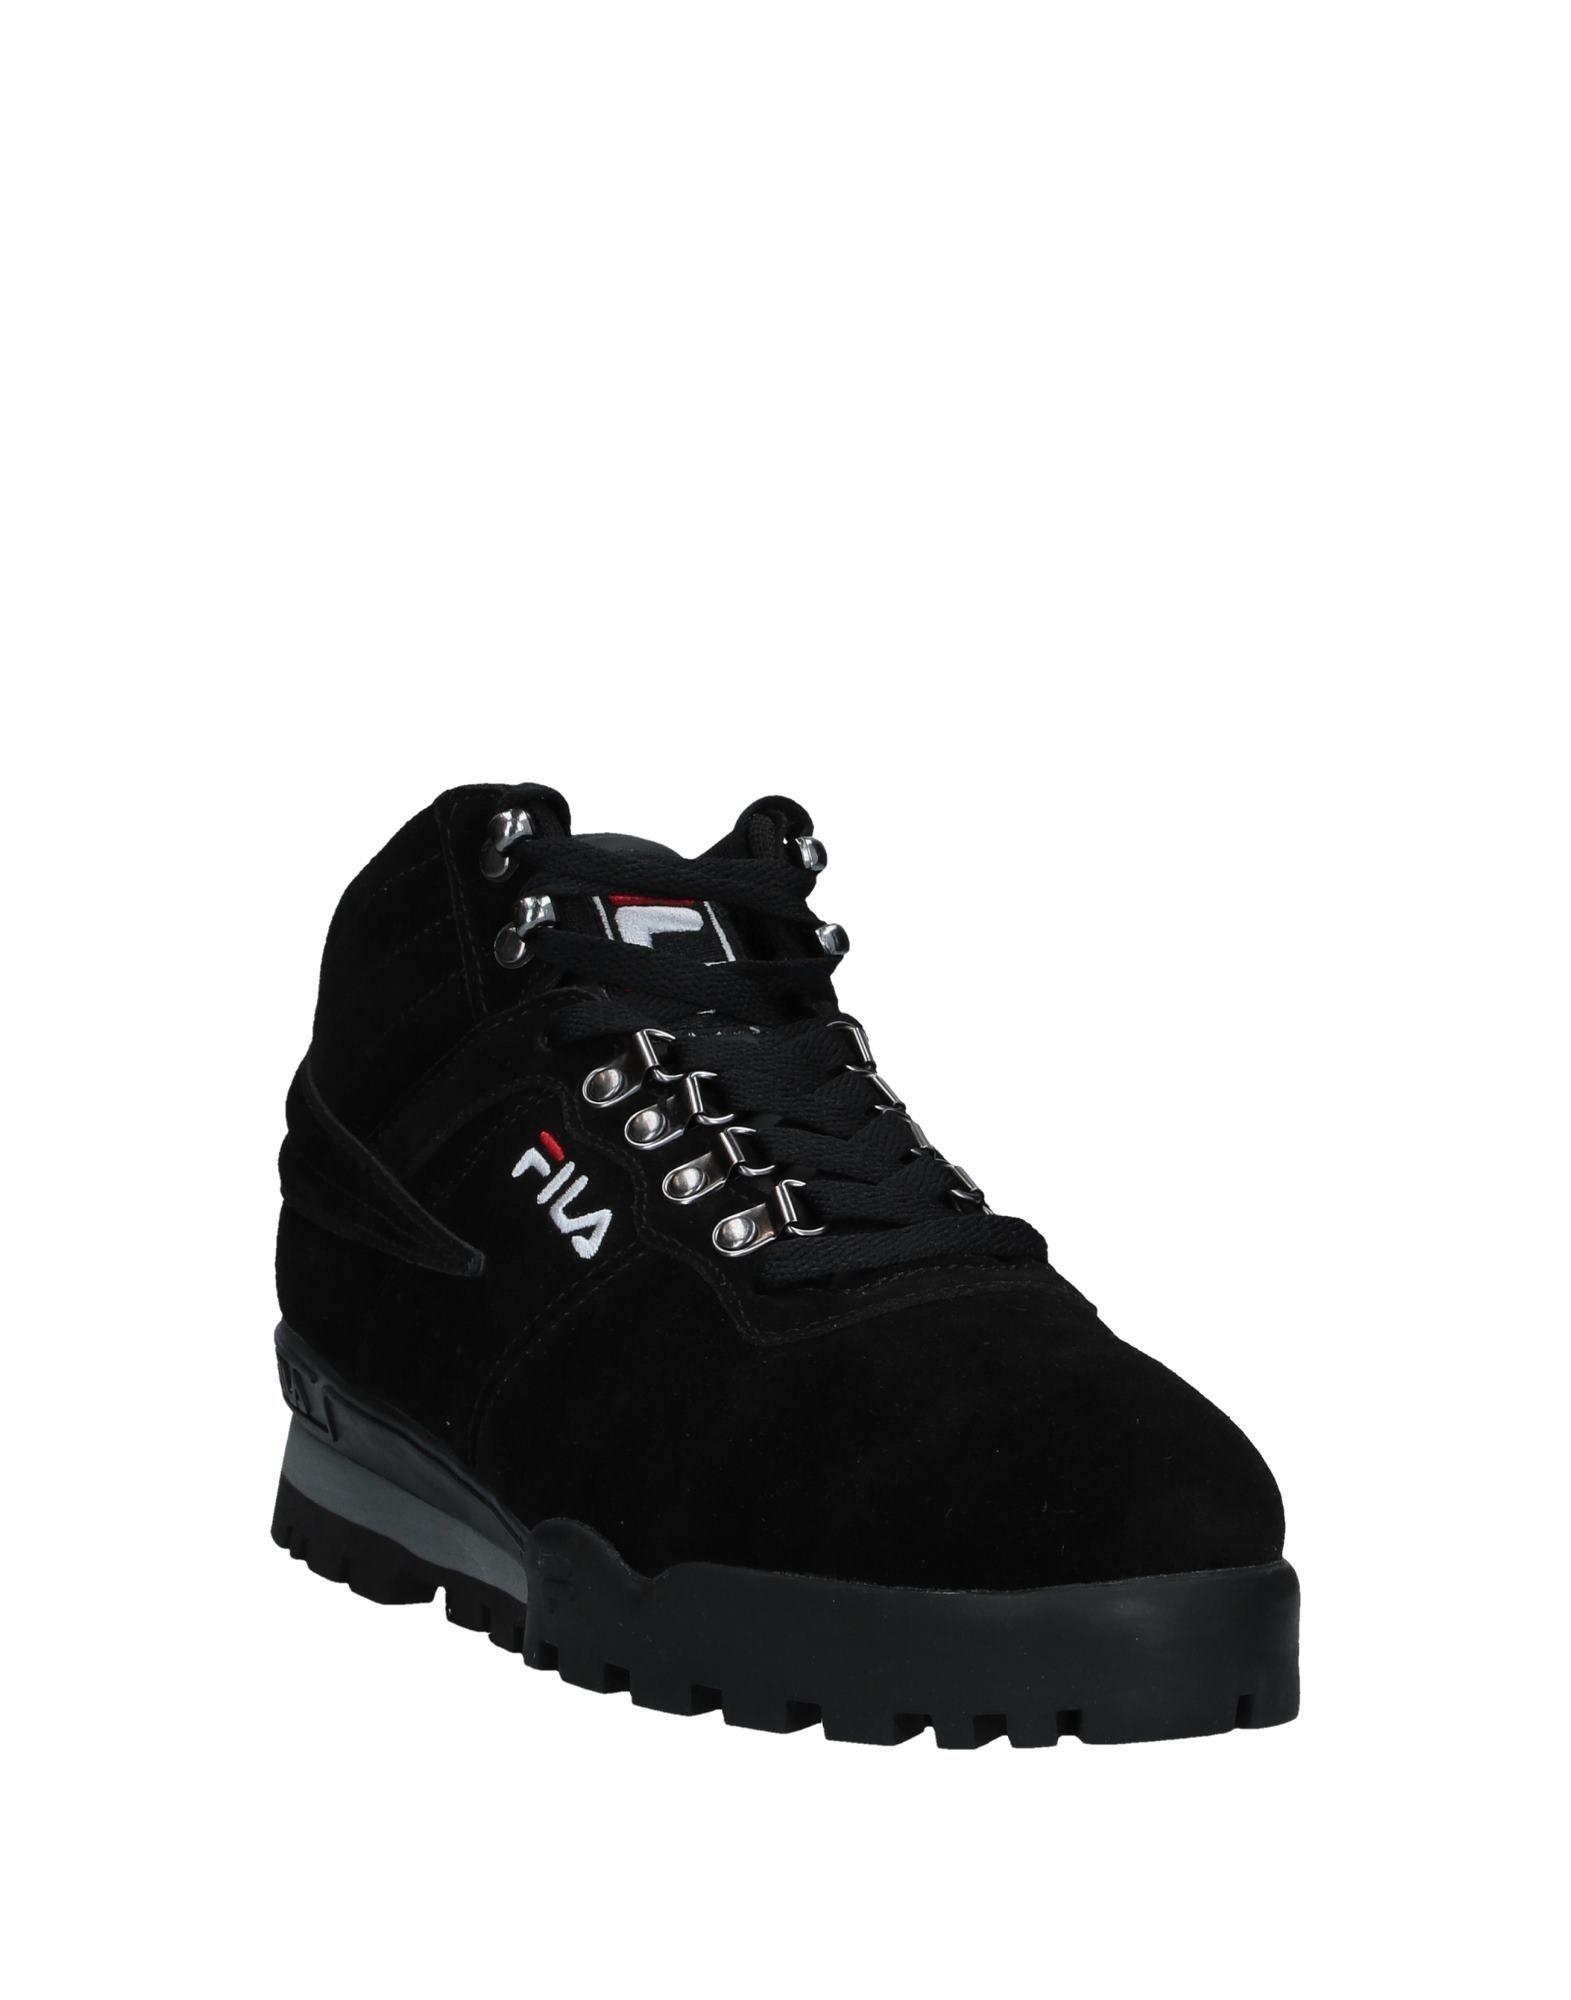 Fila Suede High-tops & Sneakers in Black for Men - Lyst